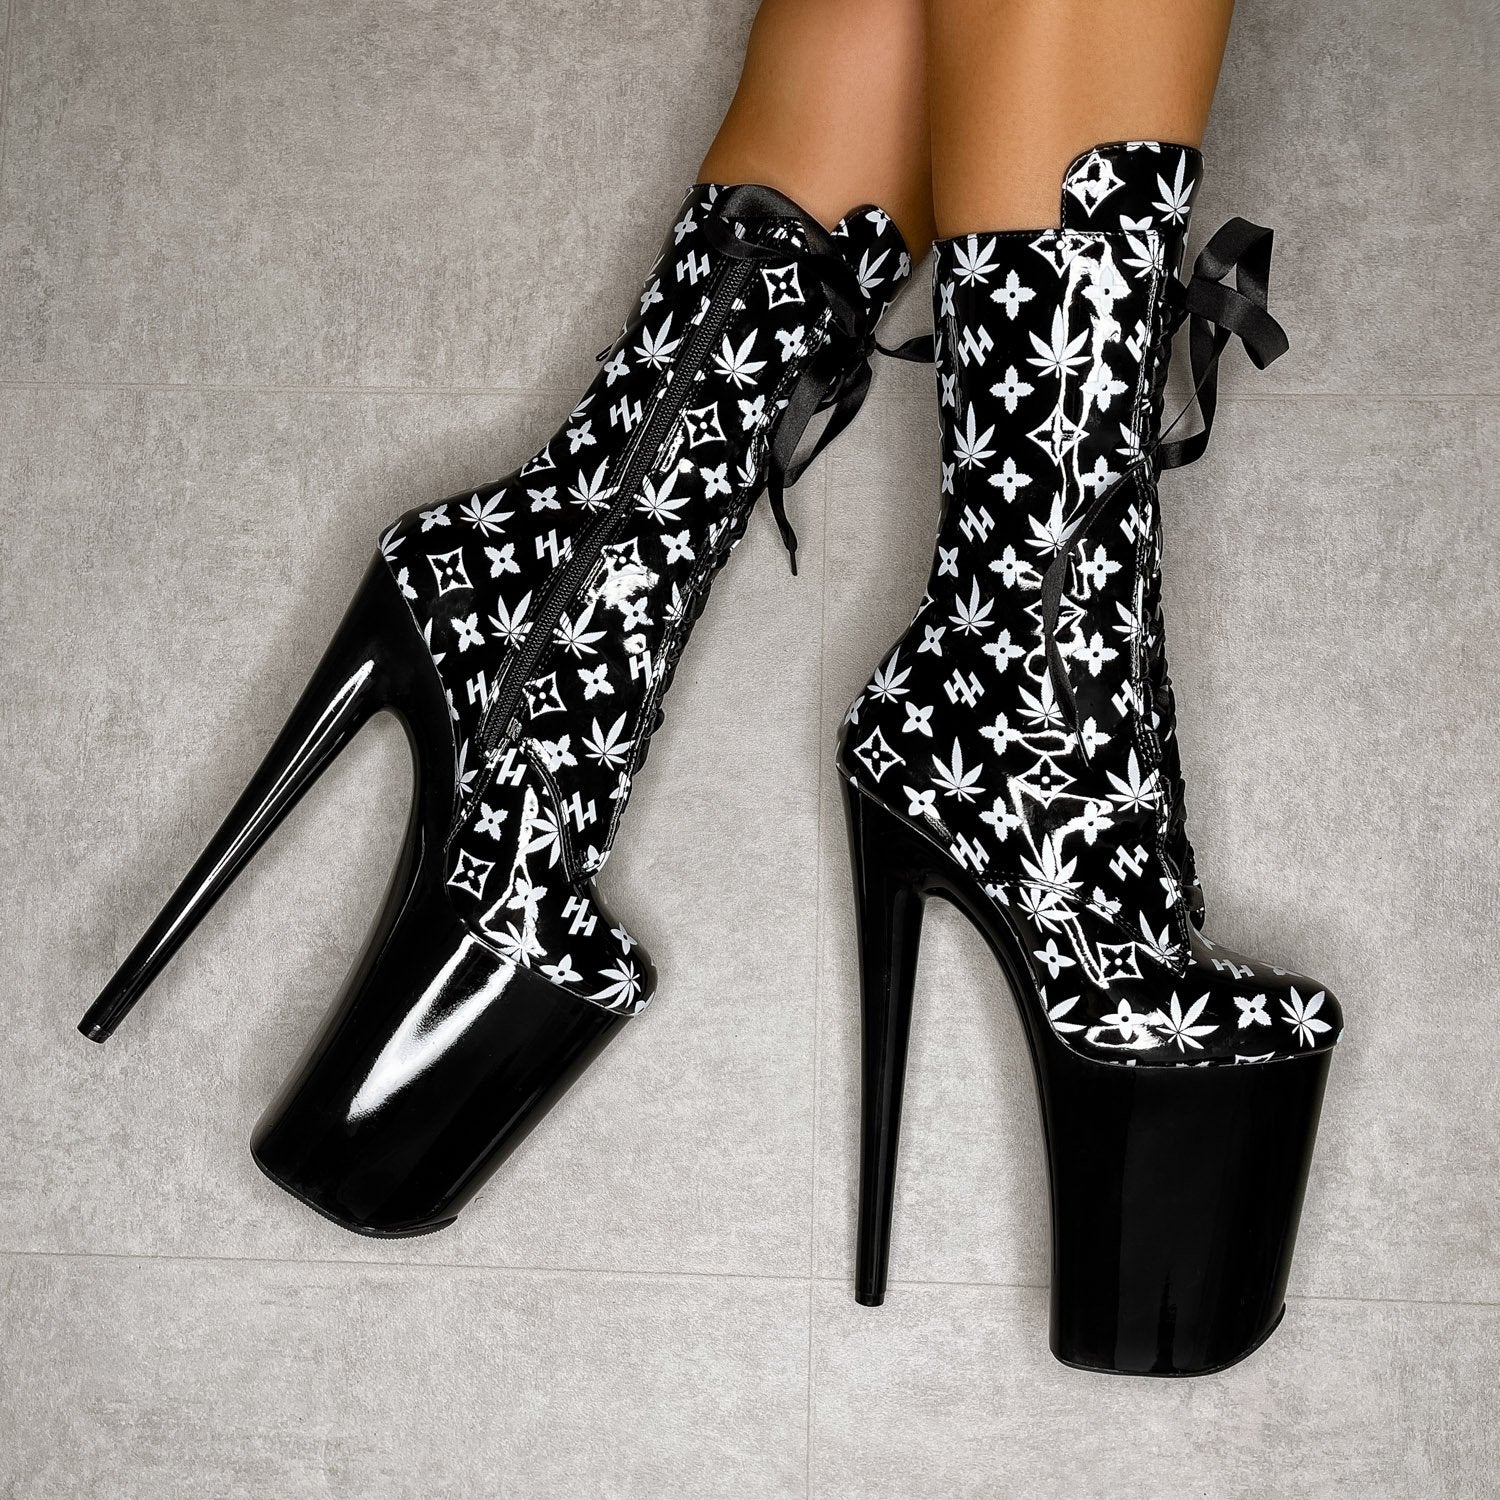 Branded Boot - Black/Black - 9 INCH, stripper shoe, stripper heel, pole heel, not a pleaser, platform, dancer, pole dance, floor work